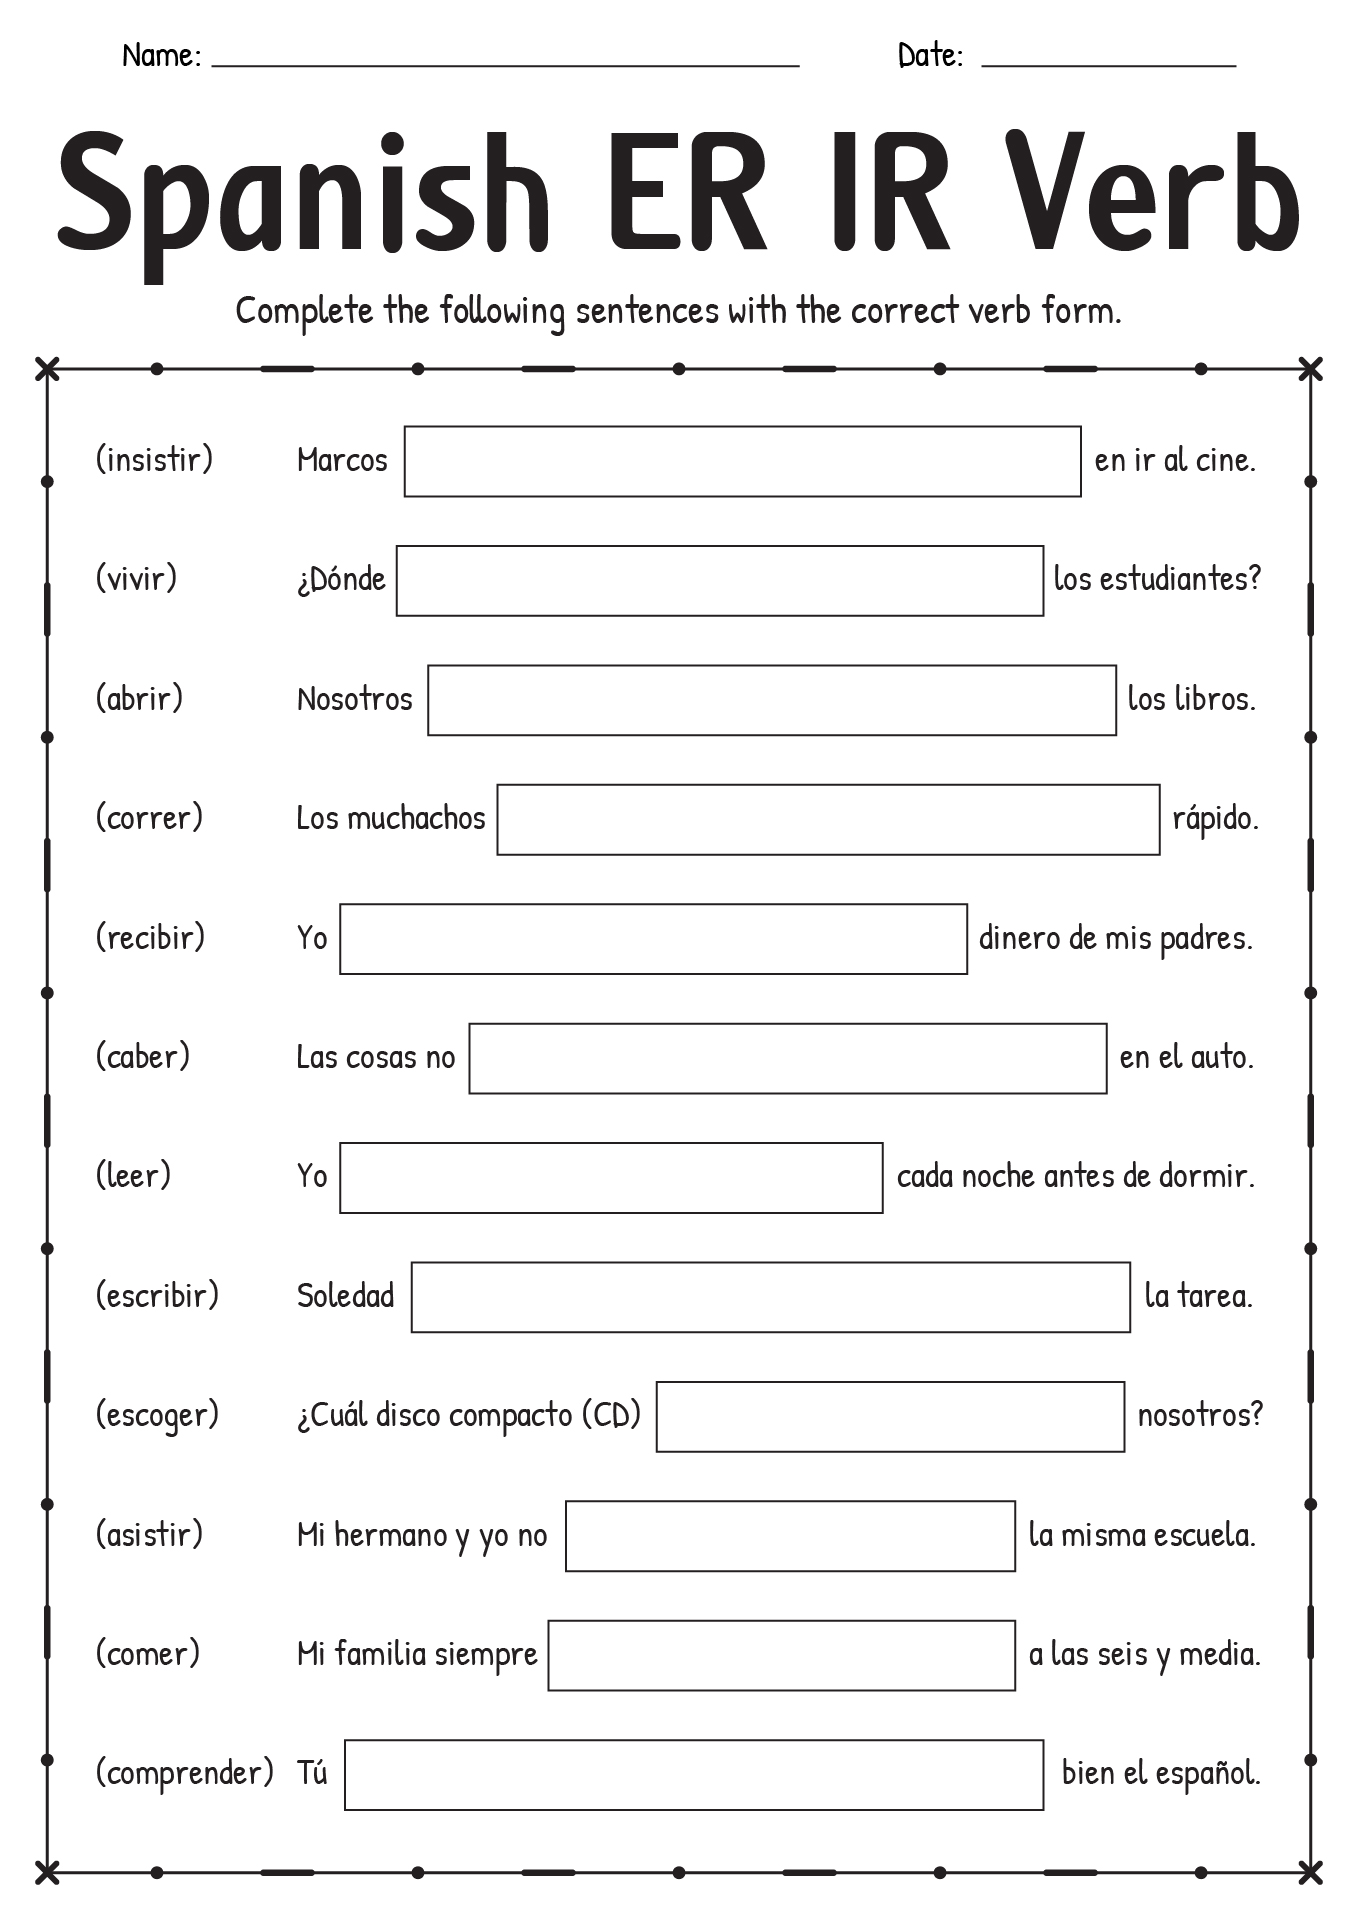 8-best-images-of-conjugation-present-tense-verb-worksheet-spanish-verb-conjugation-worksheets